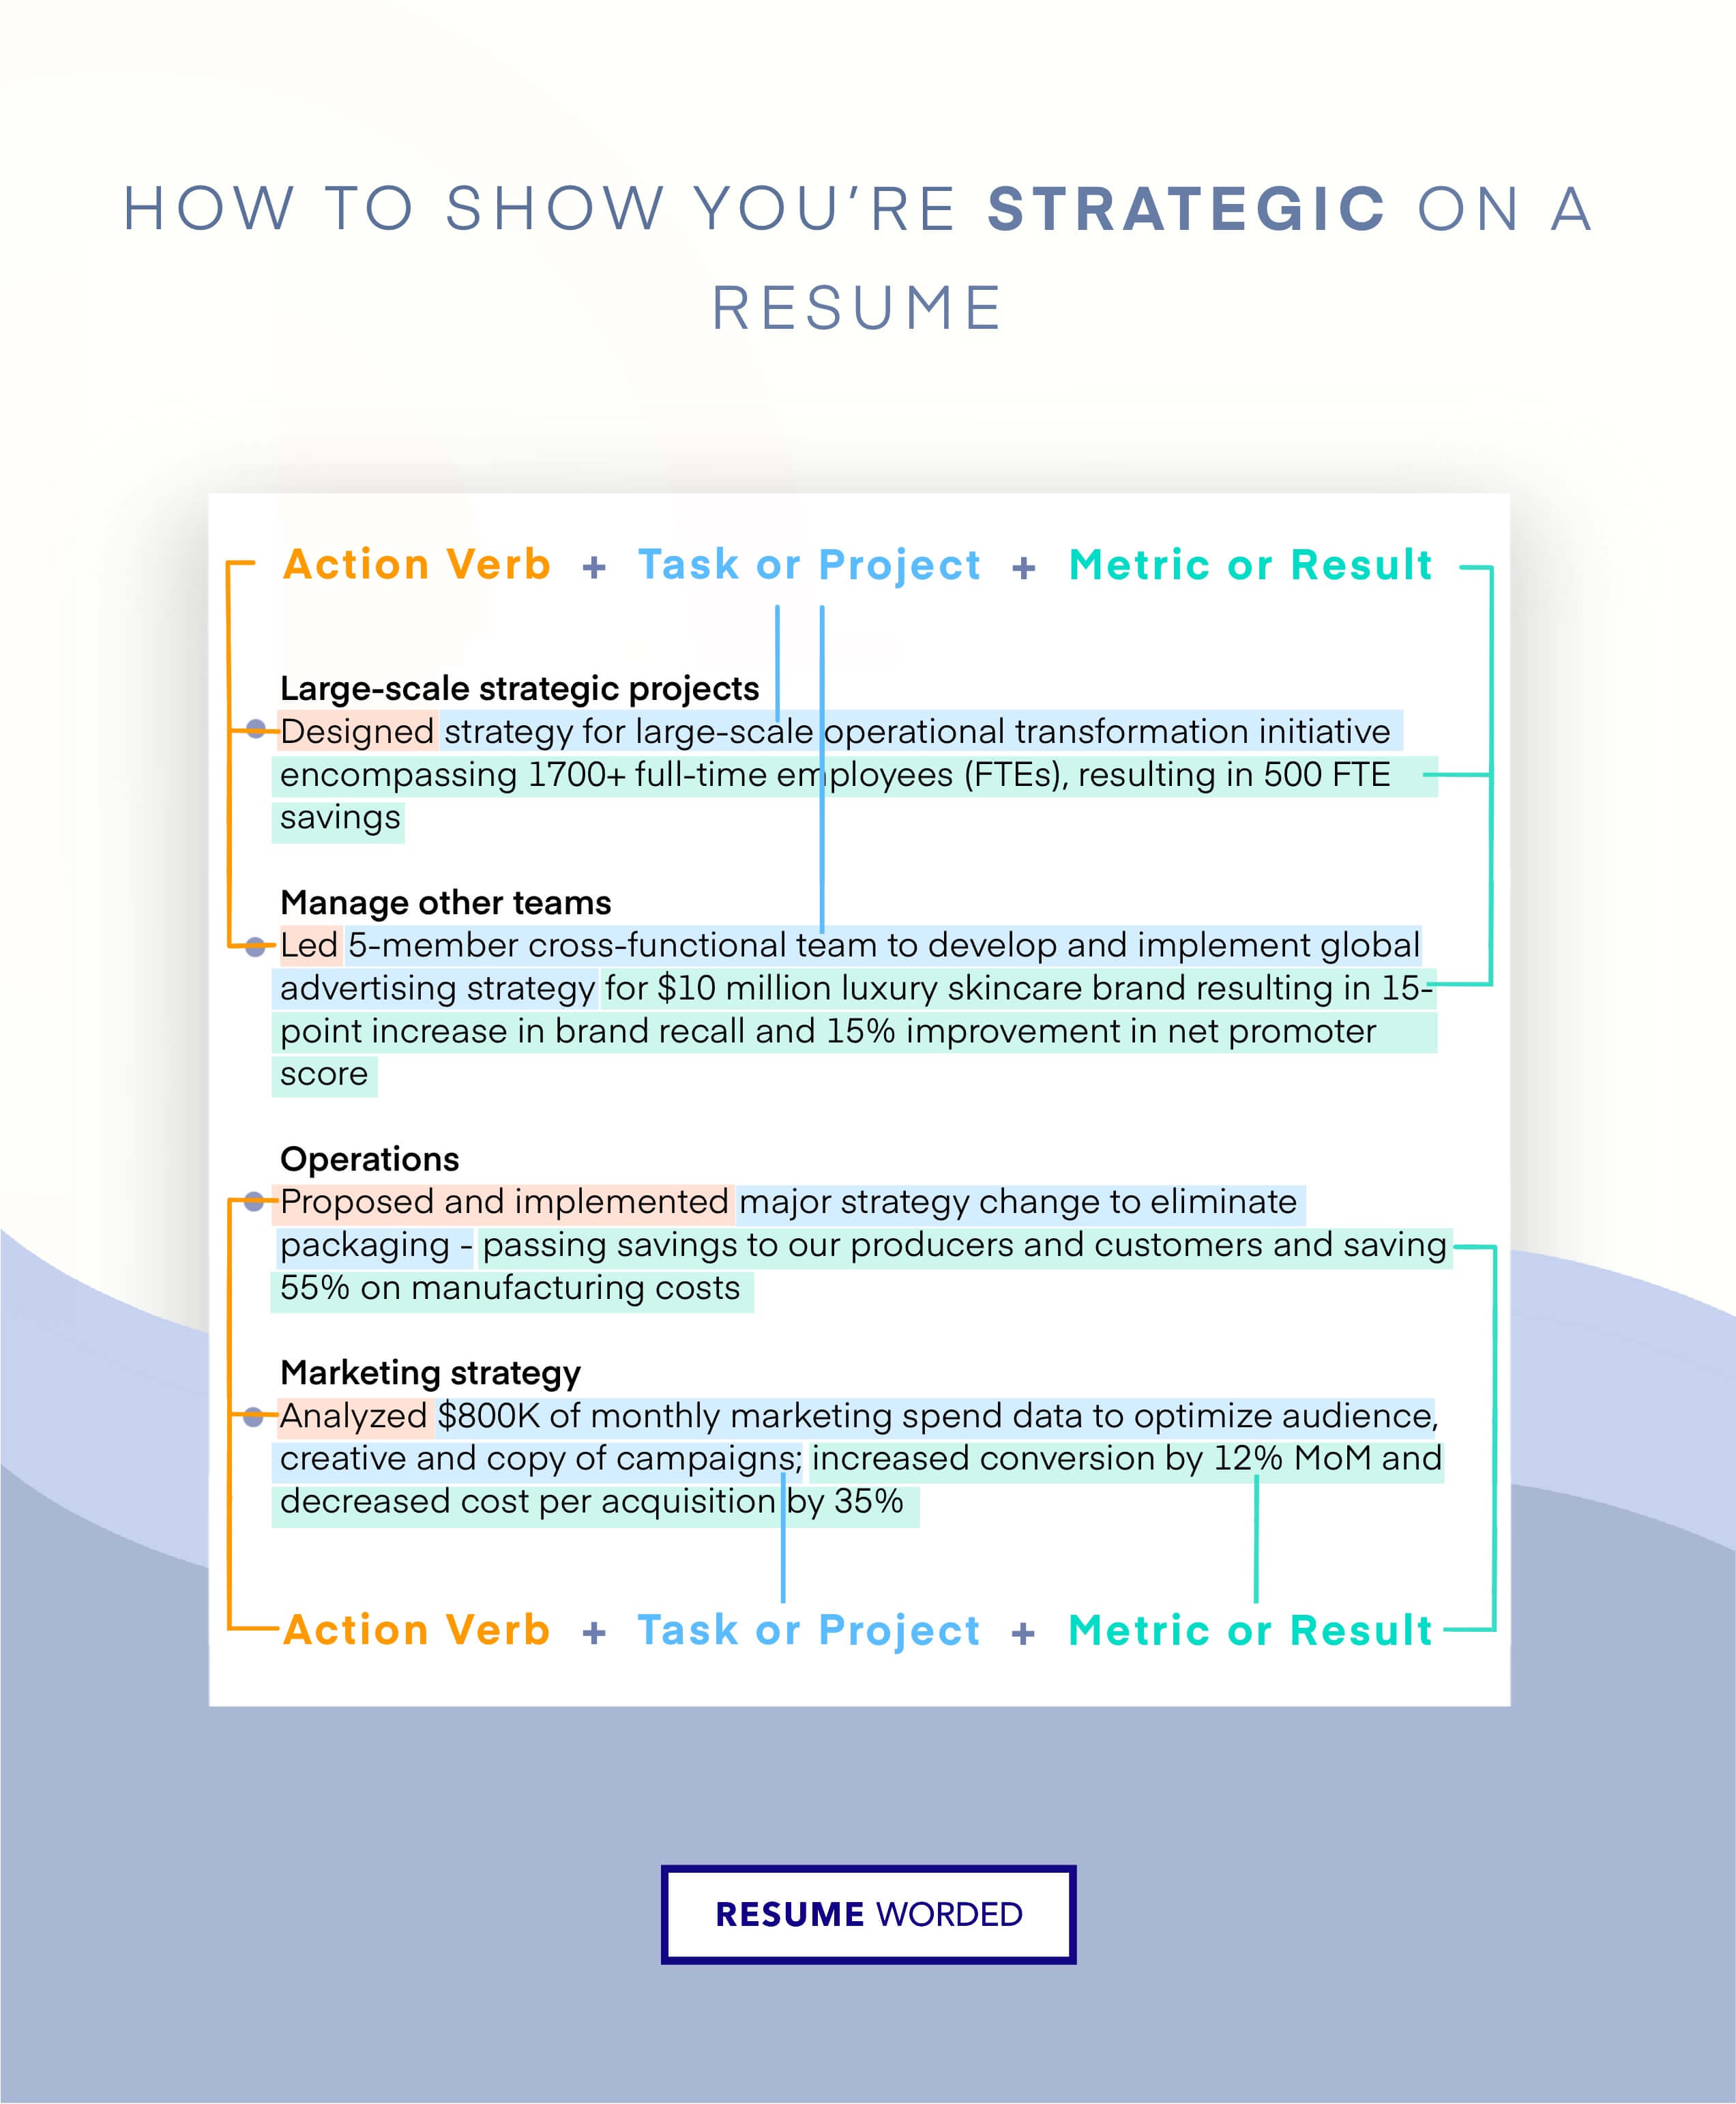 Showcase your strategic abilities - Human Resources (HR) Business Partner CV